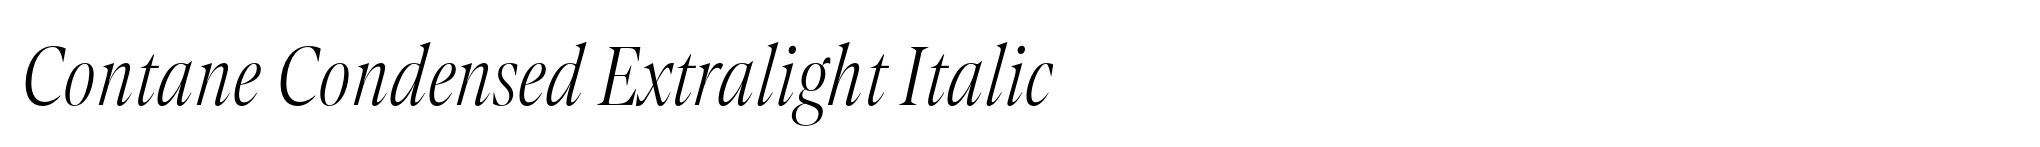 Contane Condensed Extralight Italic image